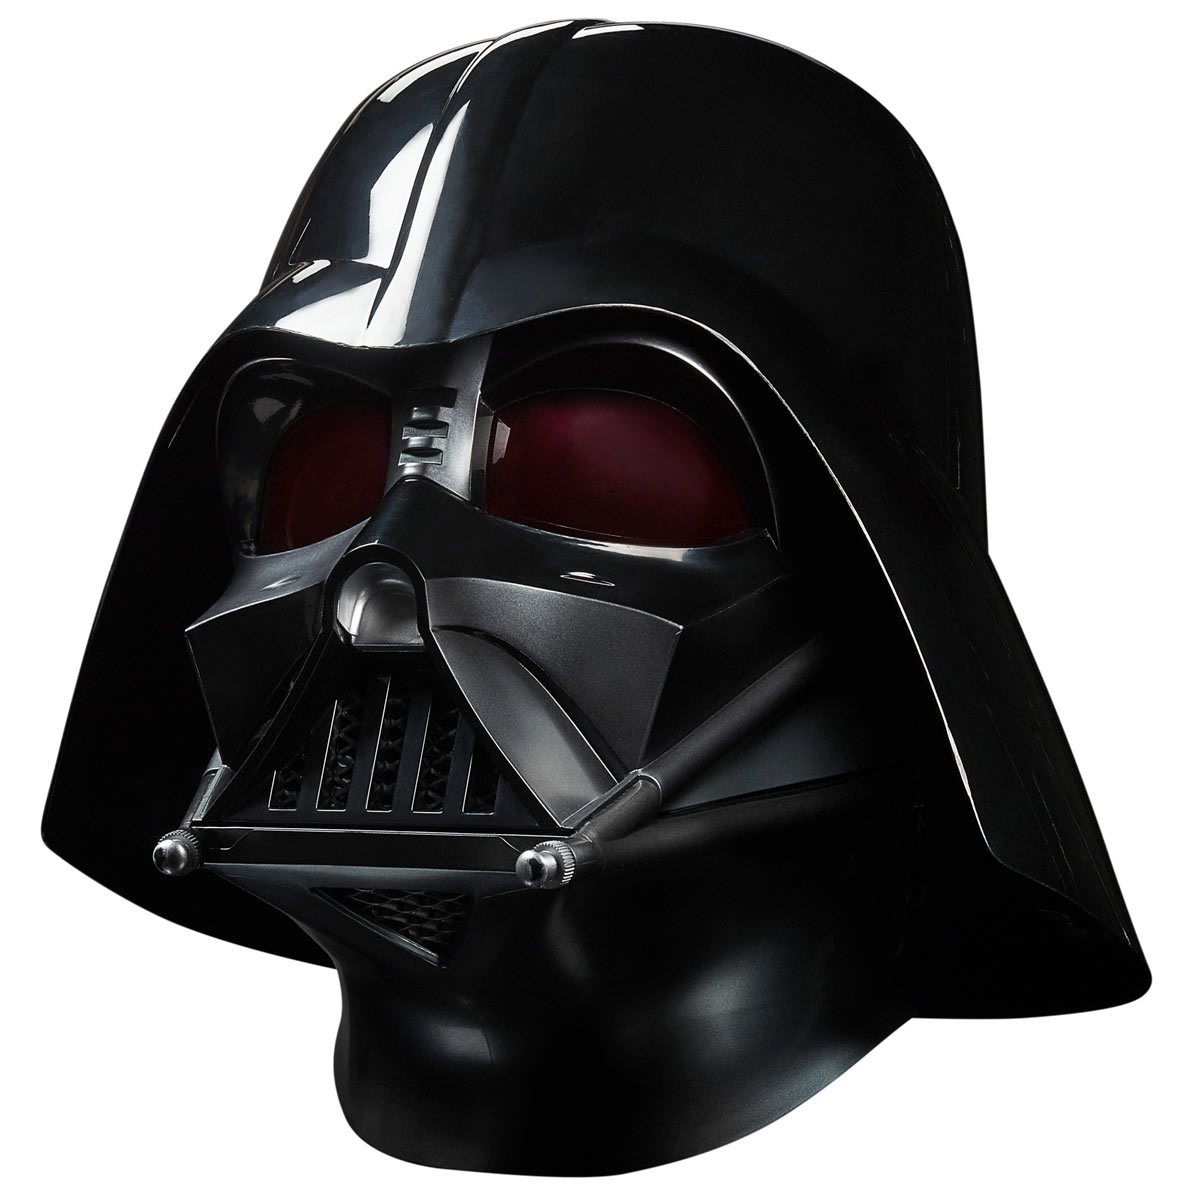 Premium Darth Vader Electronic Helmet / Black Series Prop Replica /Cosplay HTF 